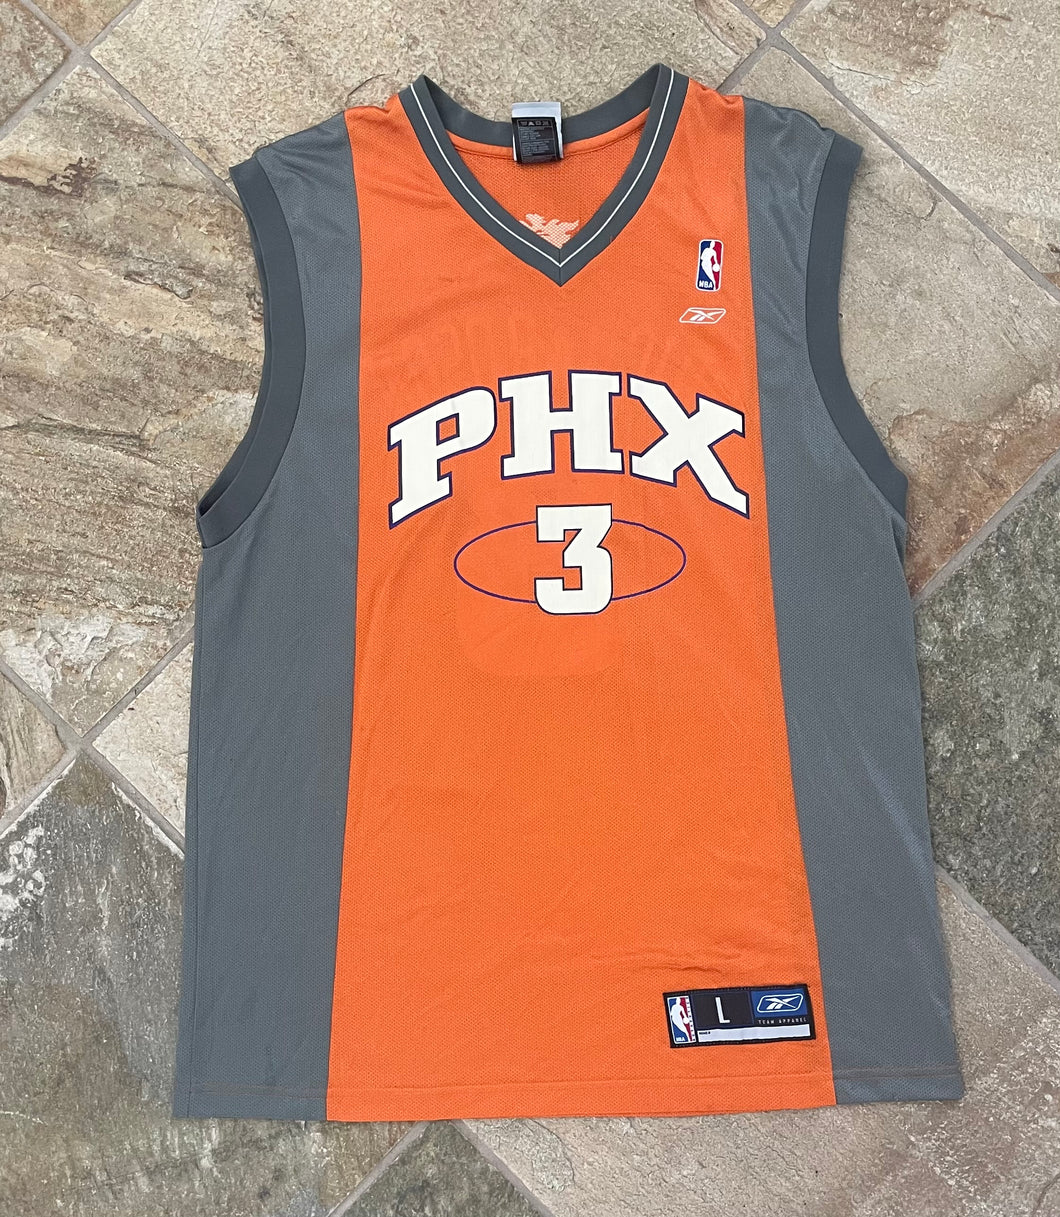 Vintage Phoenix Suns Jason Richardson Reebok Basketball Jersey, Size Large